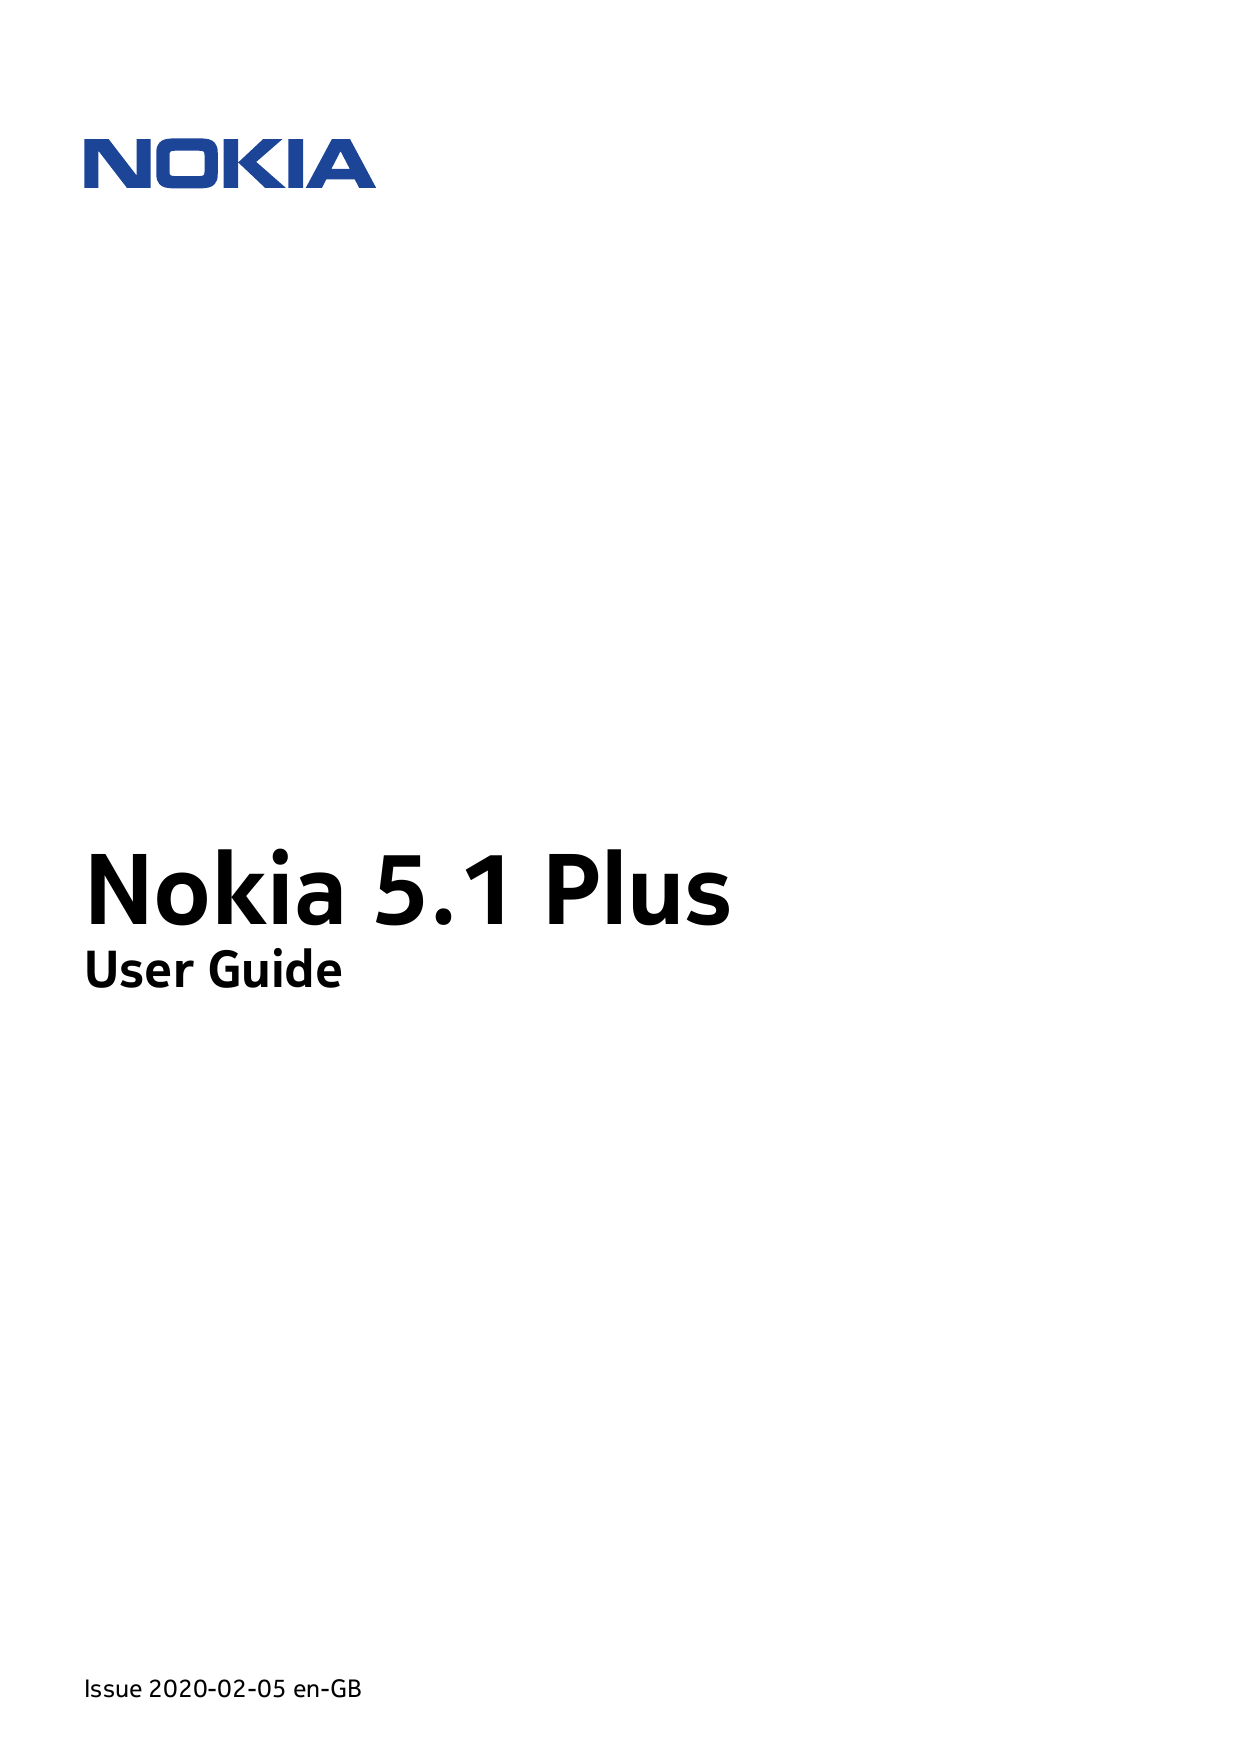 Nokia 5.1 PlusUser GuideIssue 2020-02-05 en-GB